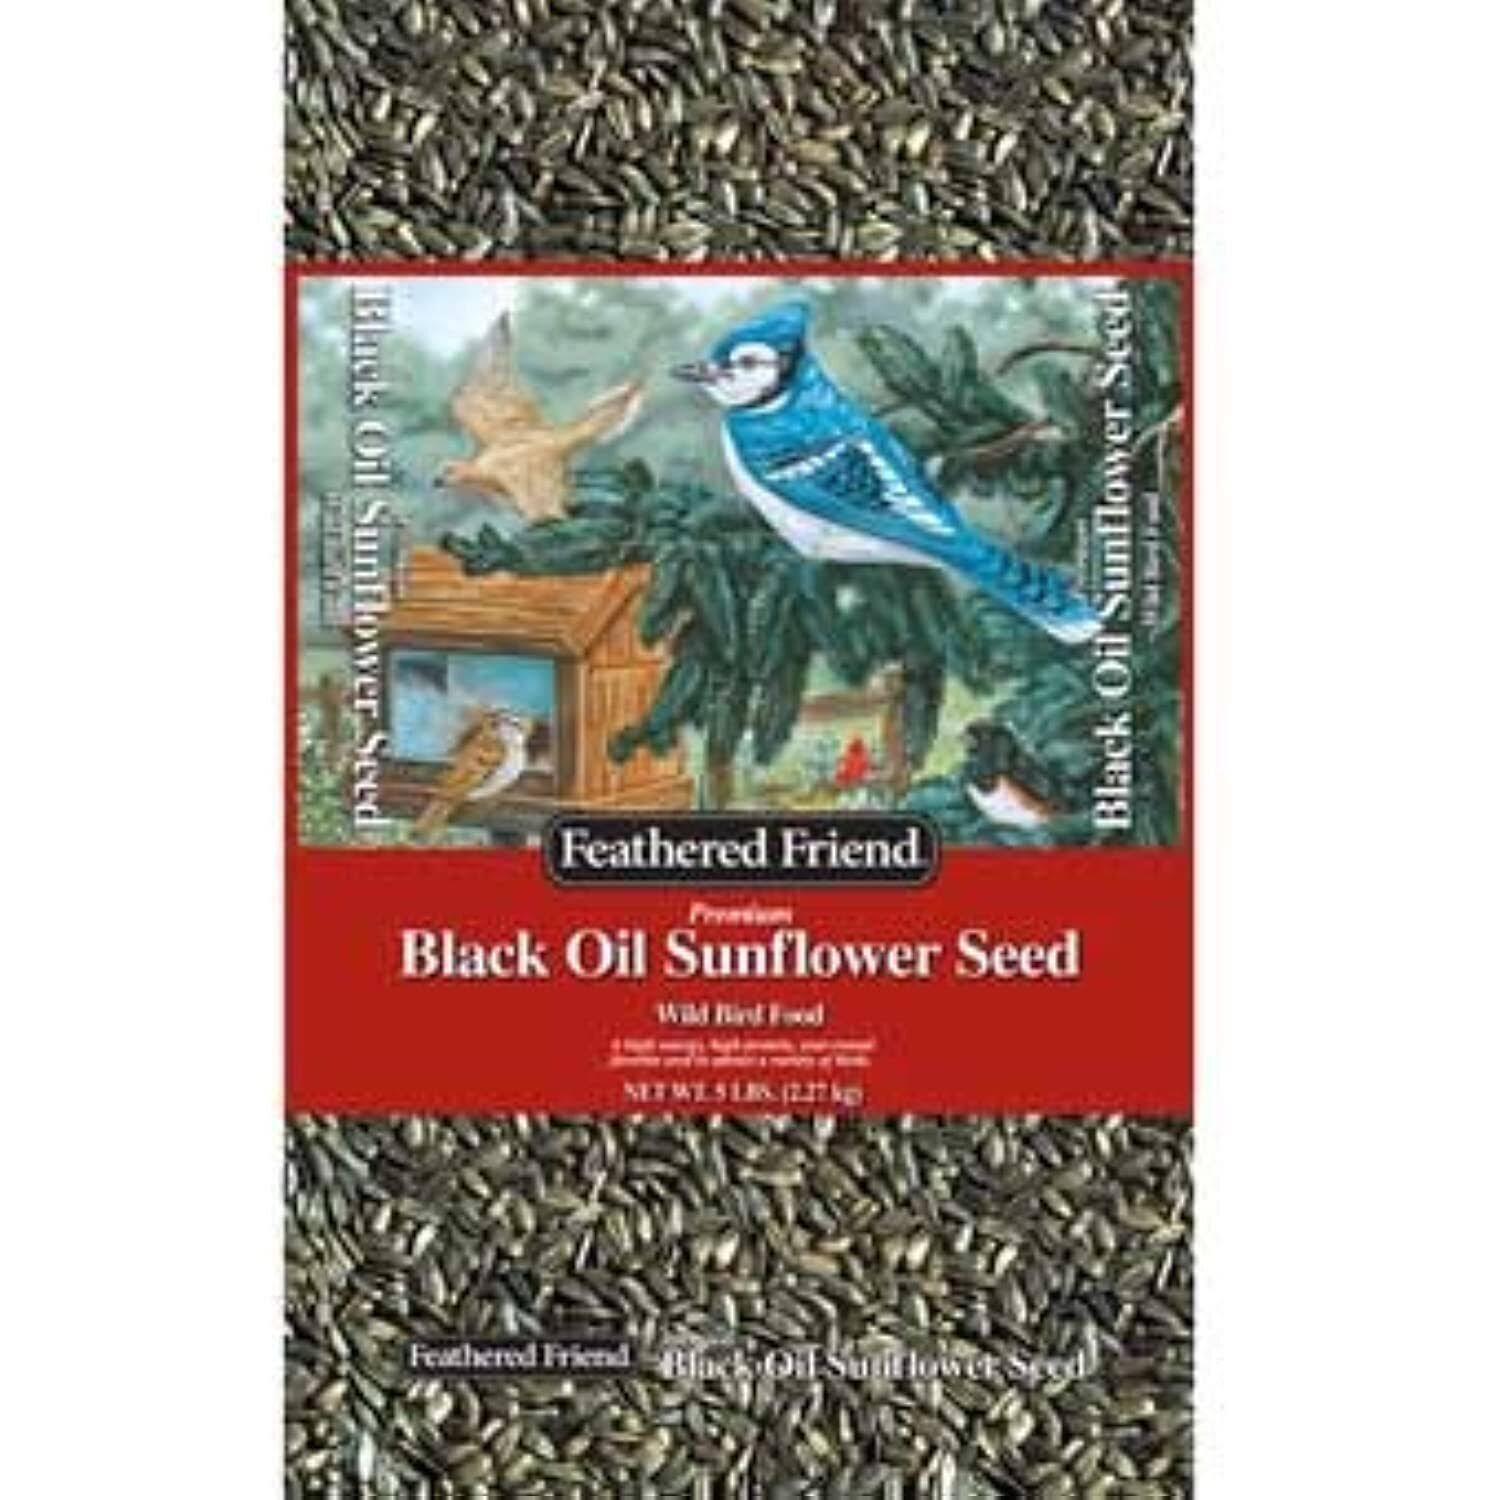 Feathered Friend Black Oil Sunflower Seed Wild Bird Food 5-Lb. Bag 14186